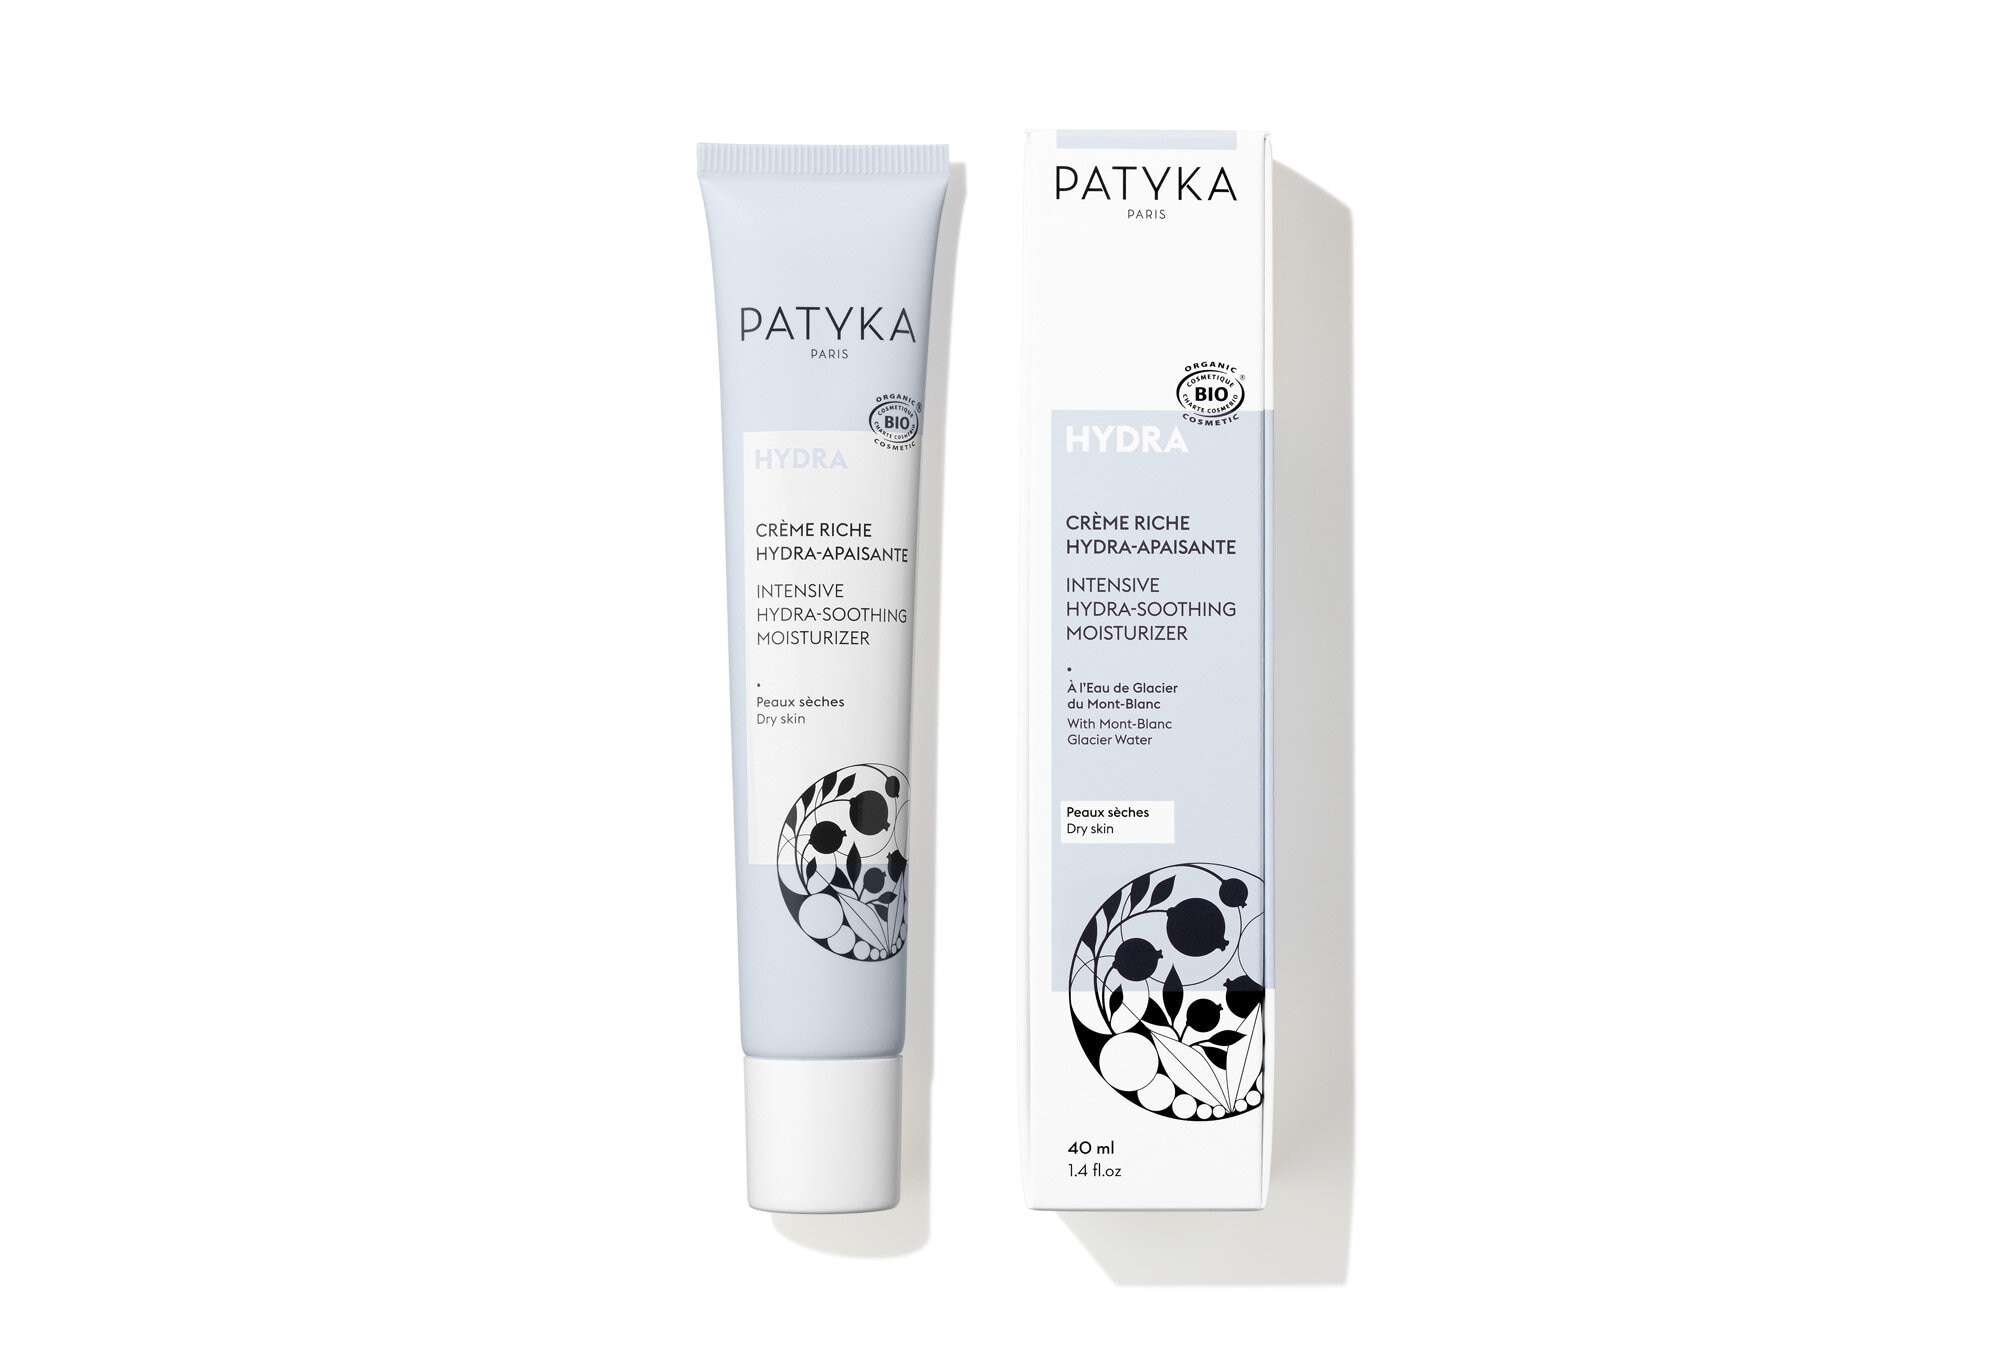 Patyka Intensive Hydra-Soothing Moisturizer kuivalle iholle